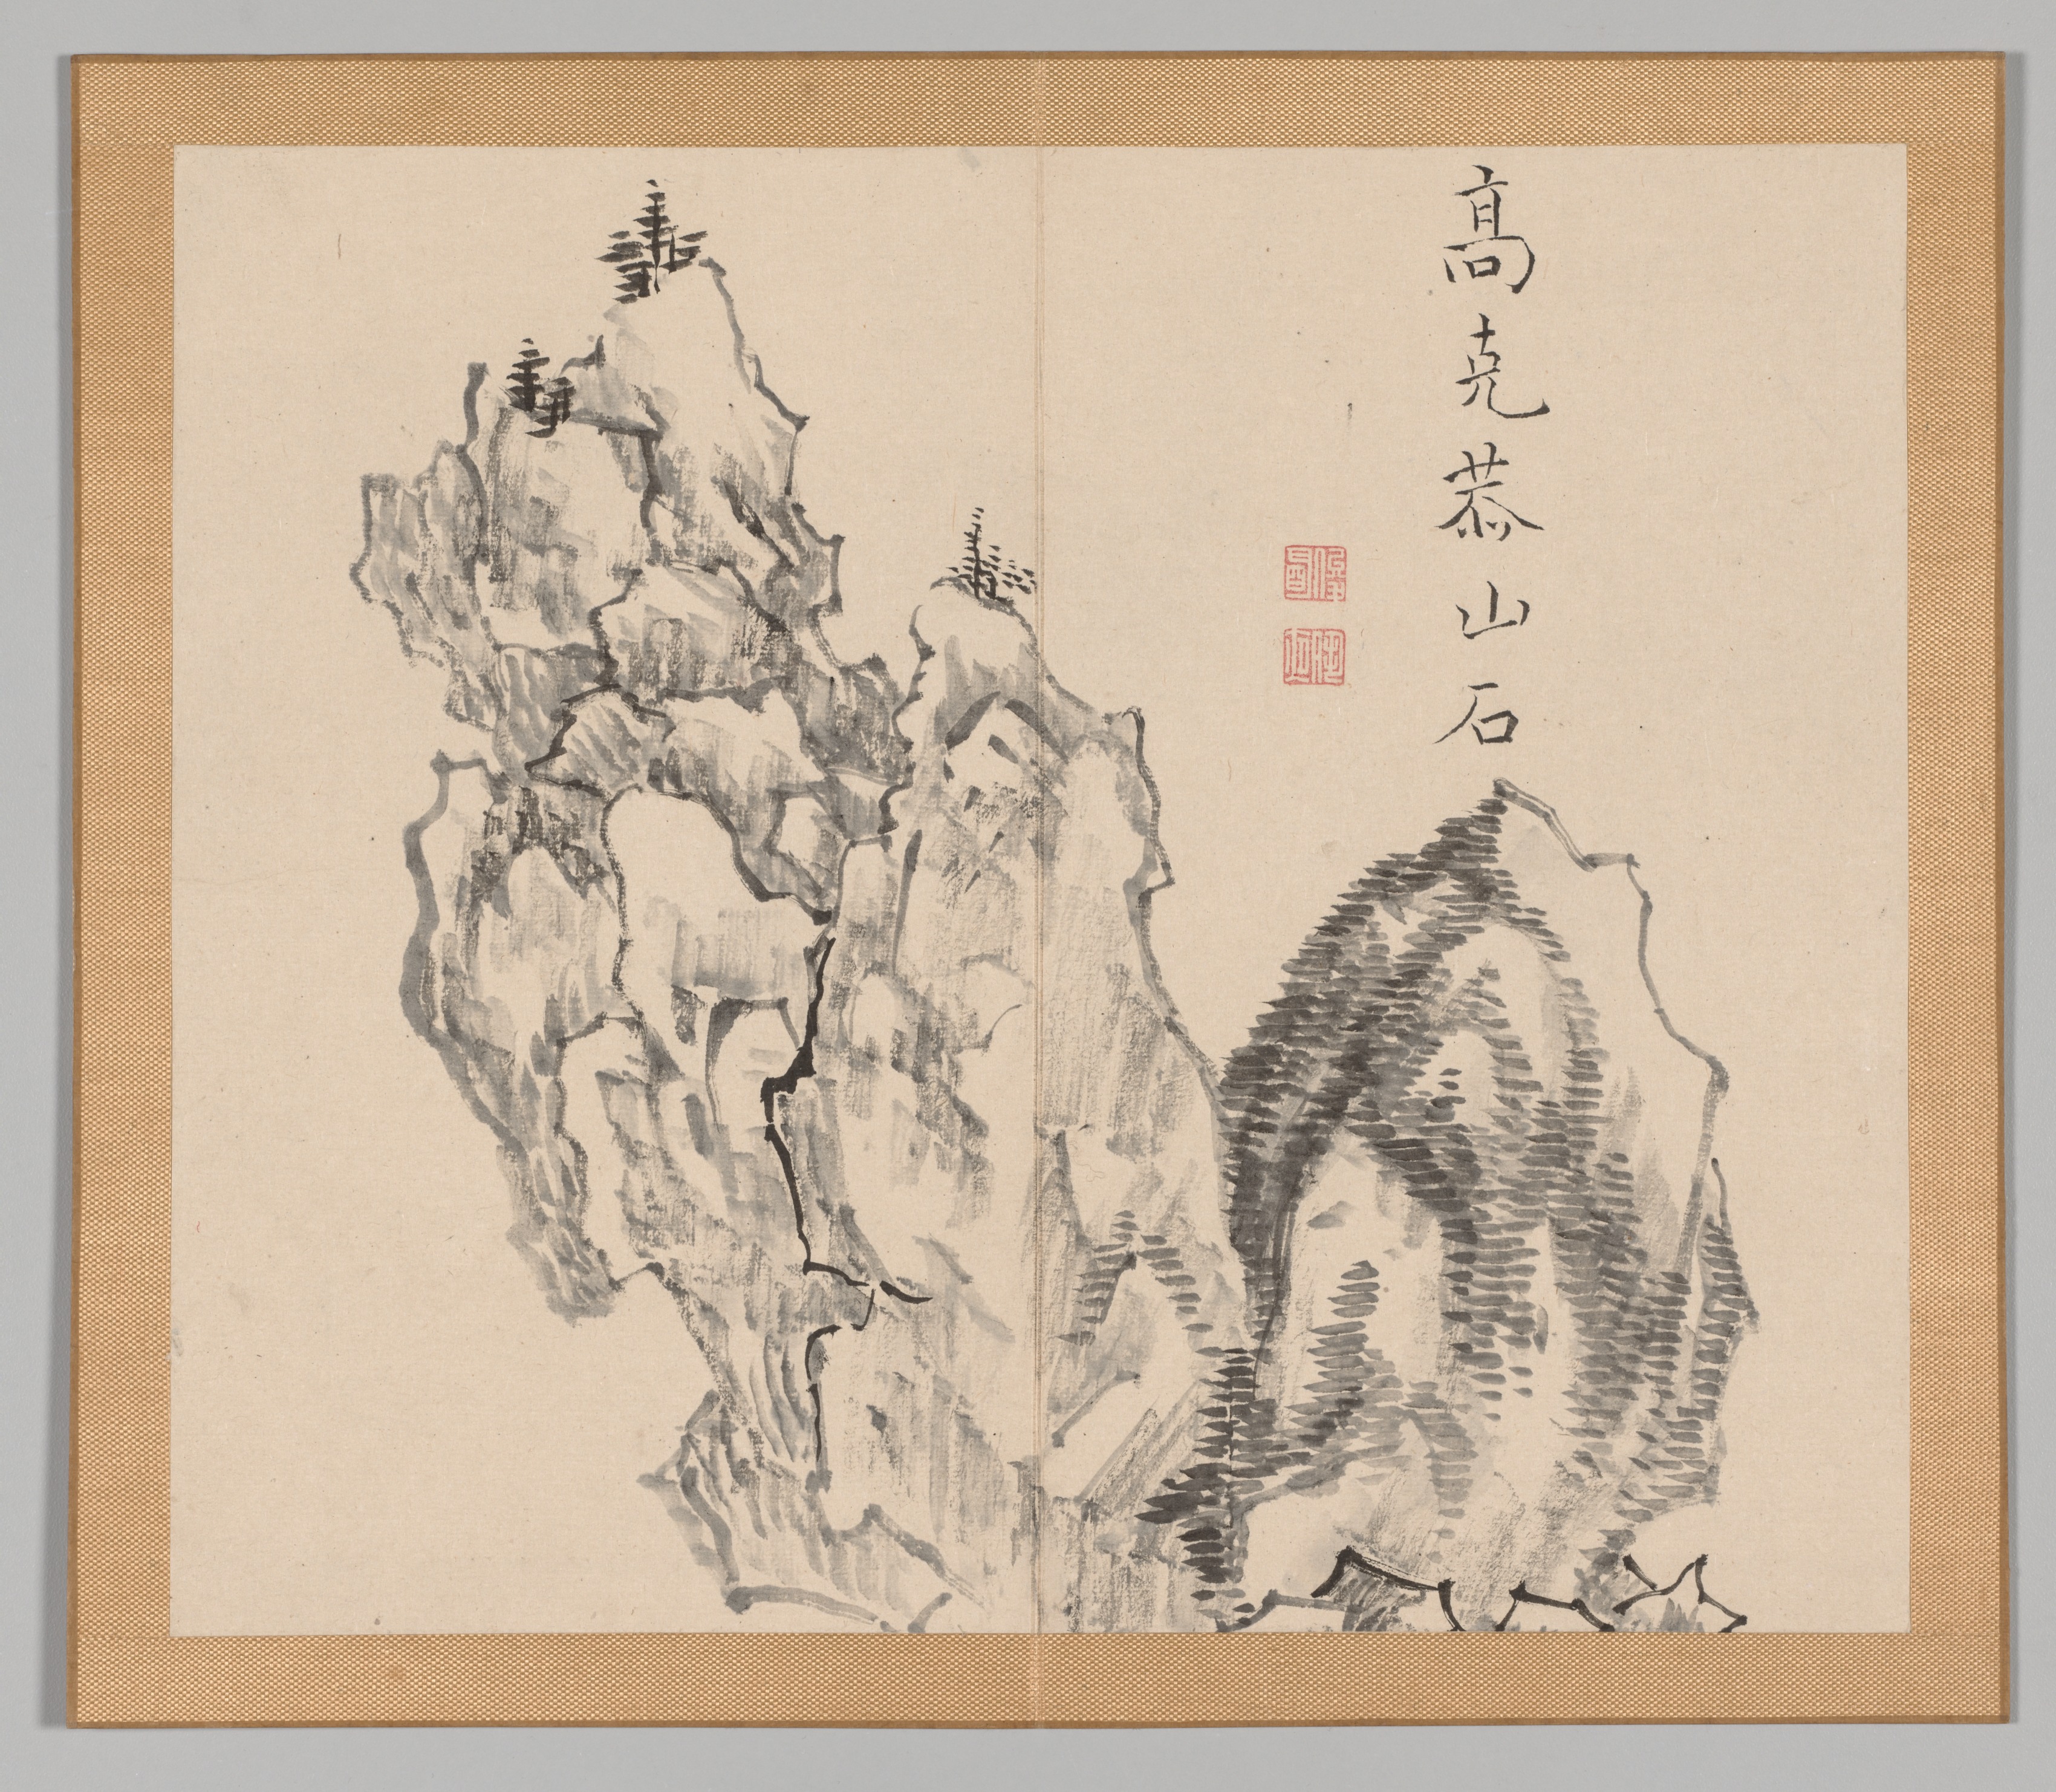 Reverberations of Taiga, Volume 1 (leaf 22)